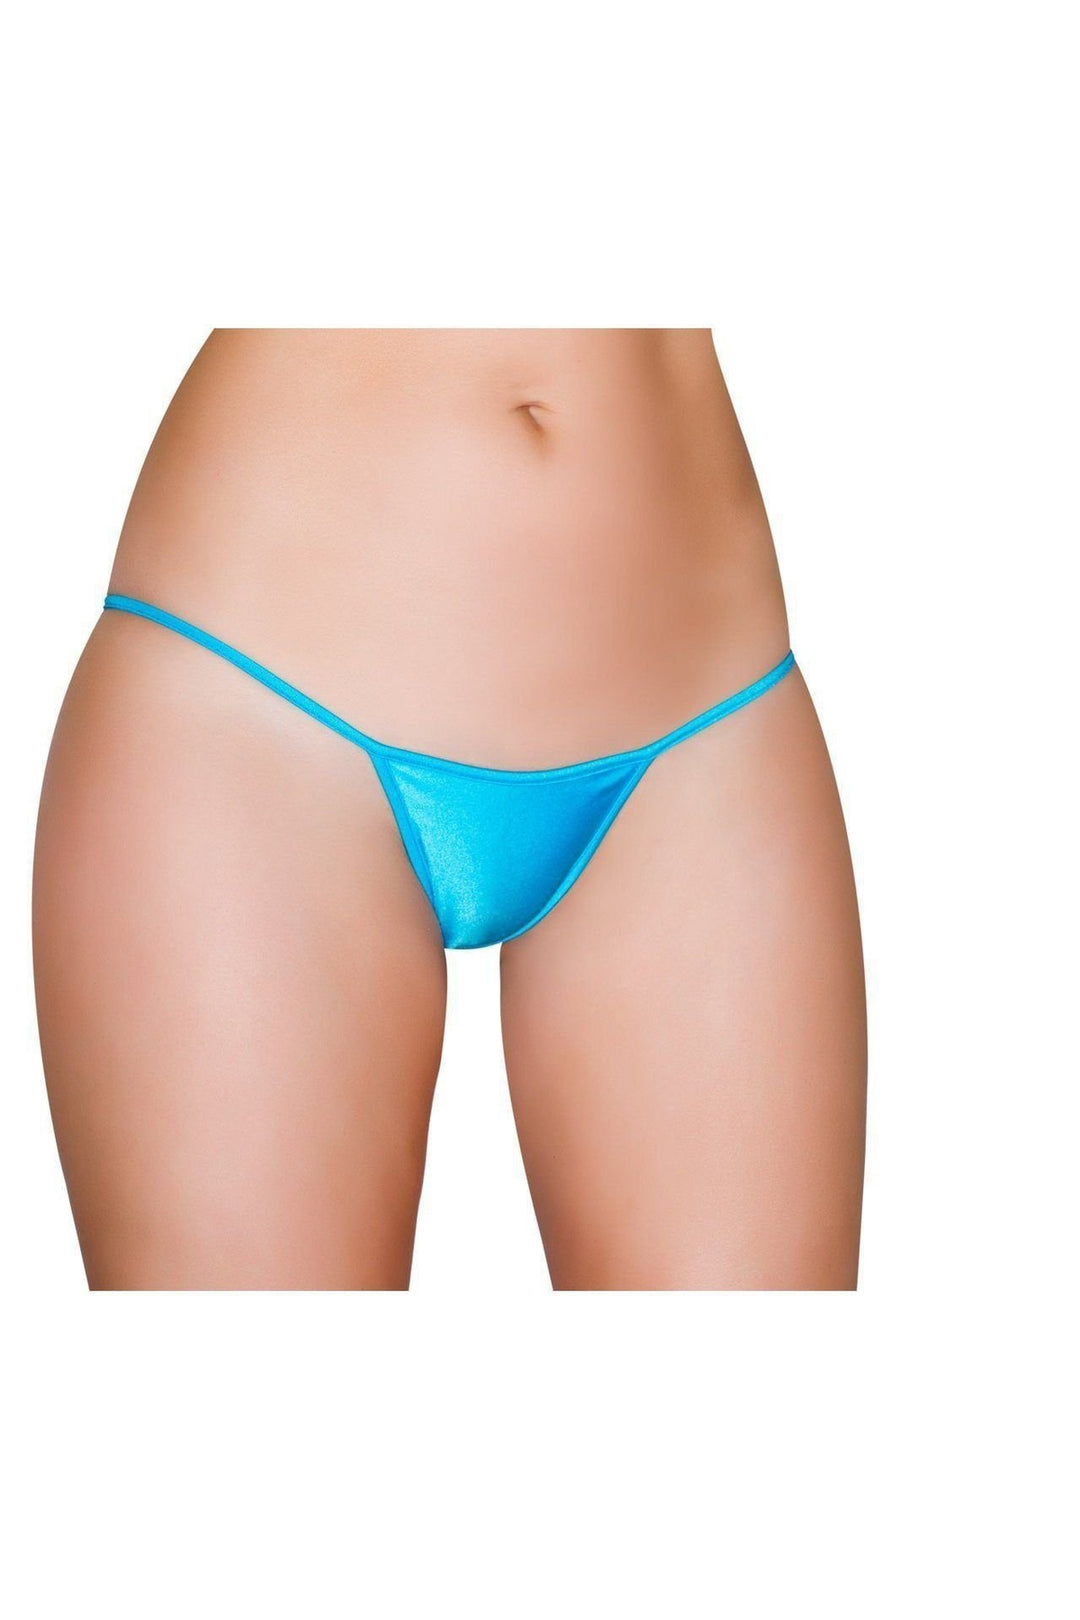 Turquoise-Dancewear Separates-Sexy Bikini Bottom-Roma Dancewear-SEXYSHOES.COM